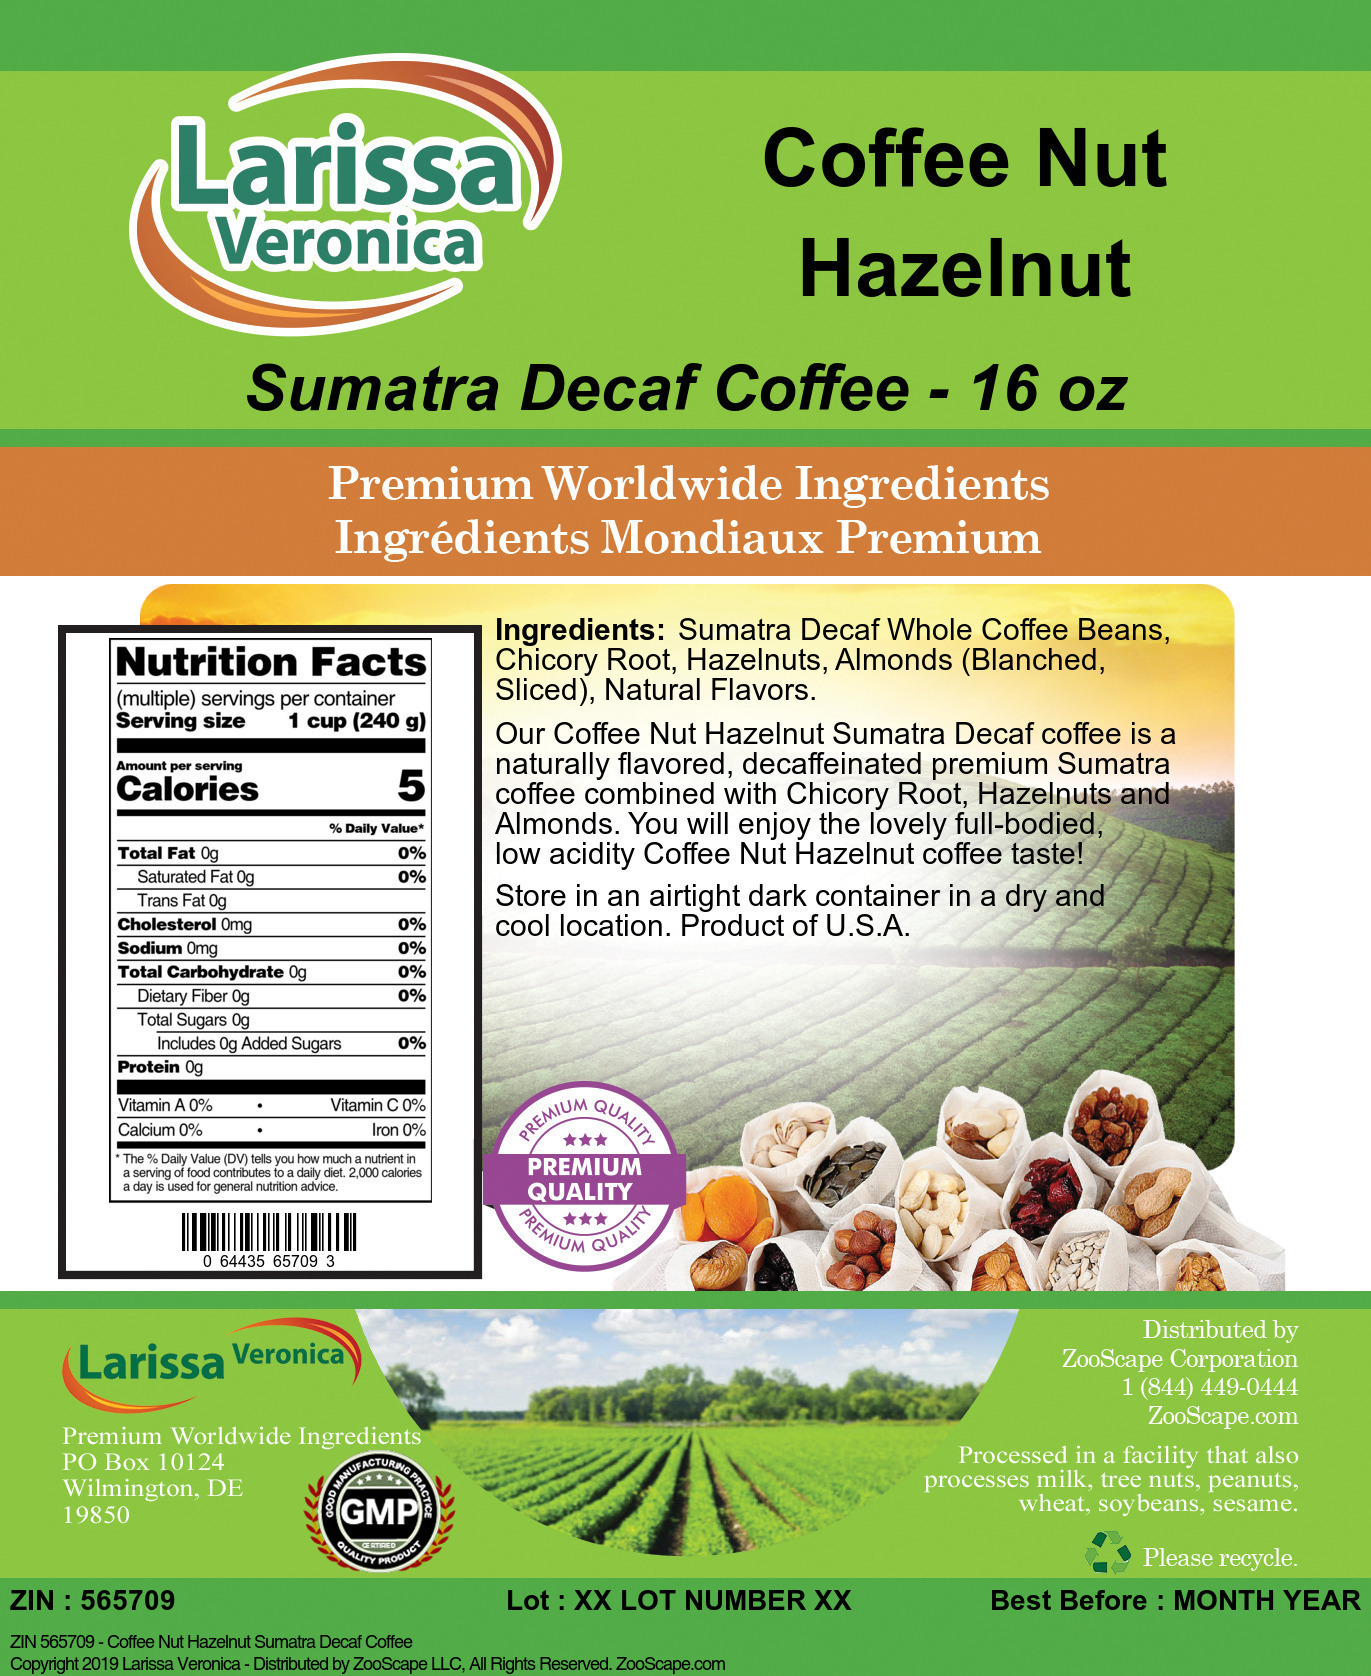 Coffee Nut Hazelnut Sumatra Decaf Coffee - Label